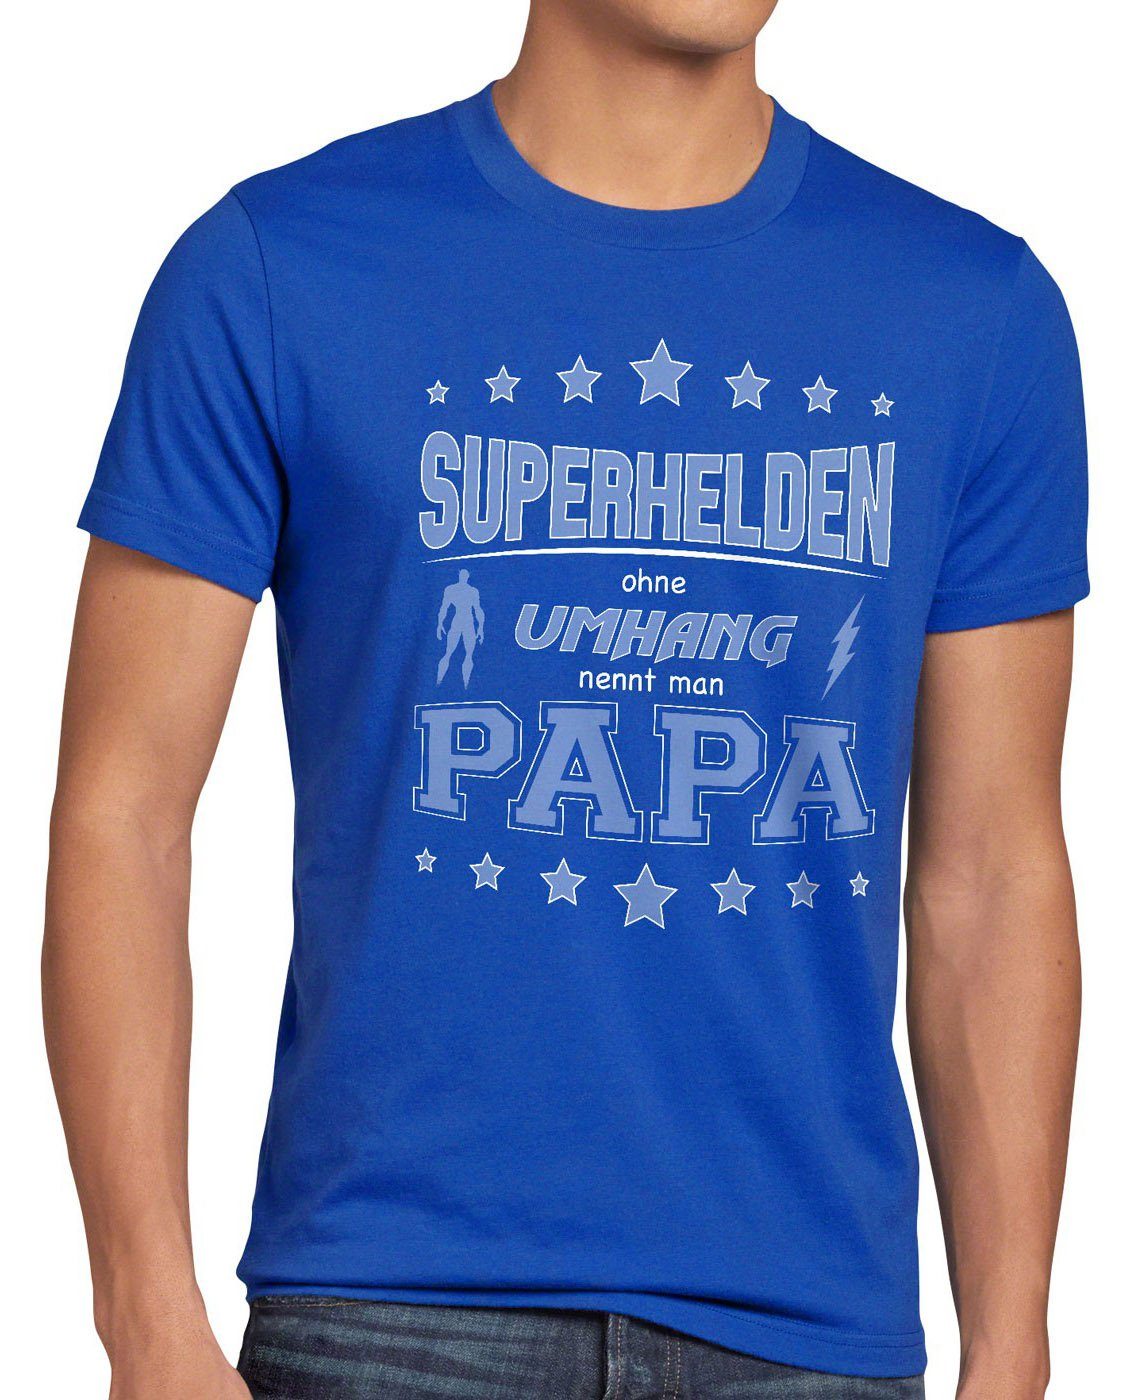 style3 Print-Shirt Herren T-Shirt Superhelden ohne Umhang nennt man Papa Fun Shirt Vater Dad Spruch blau